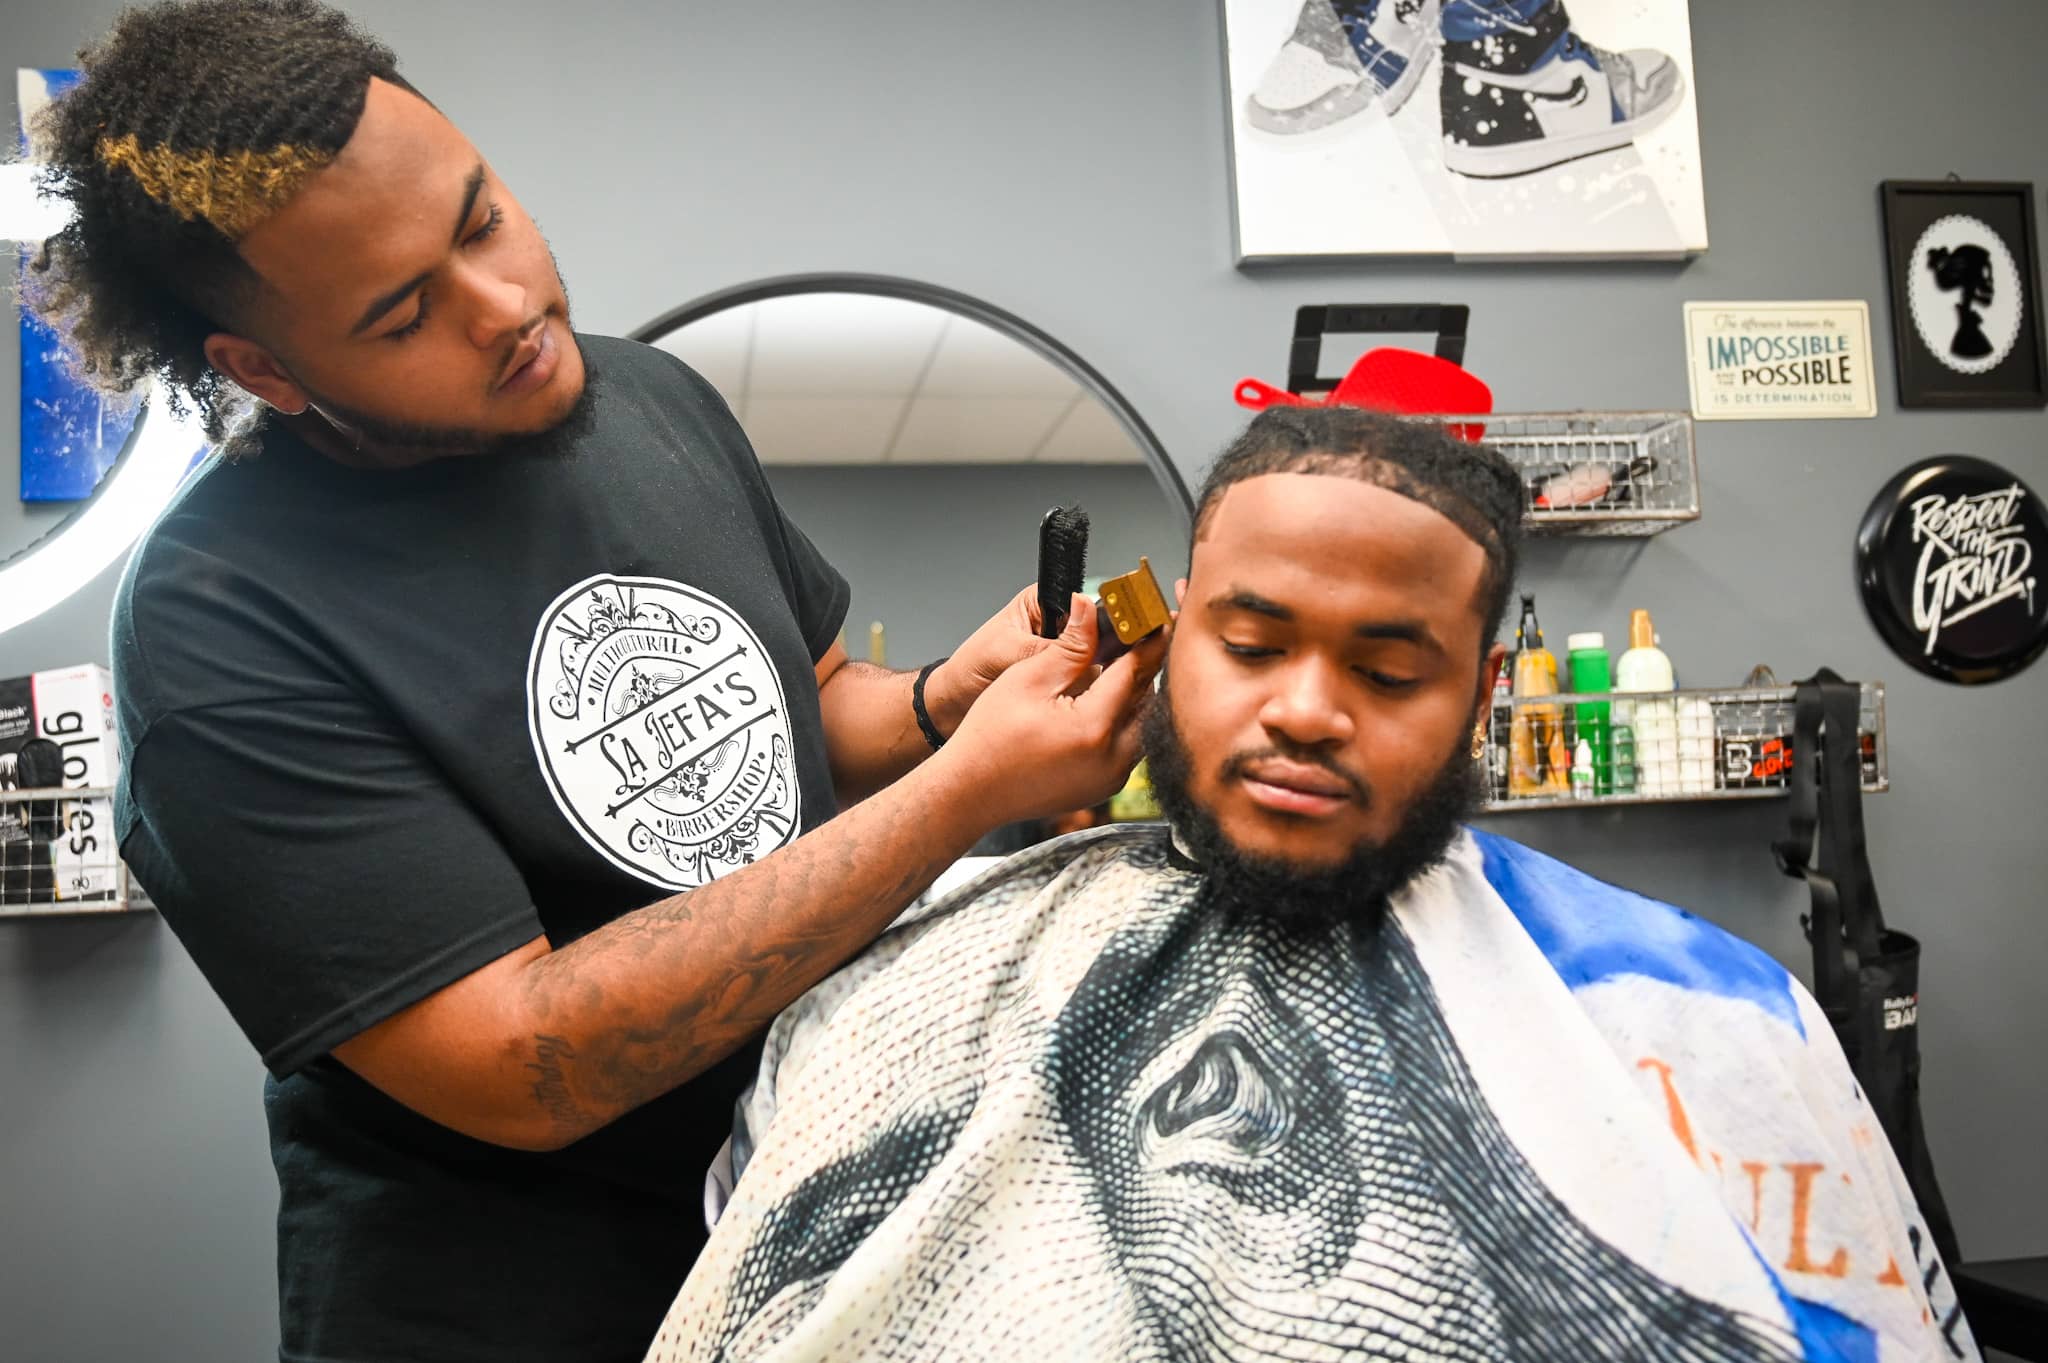 La Jefa's Multicultural Barbershop